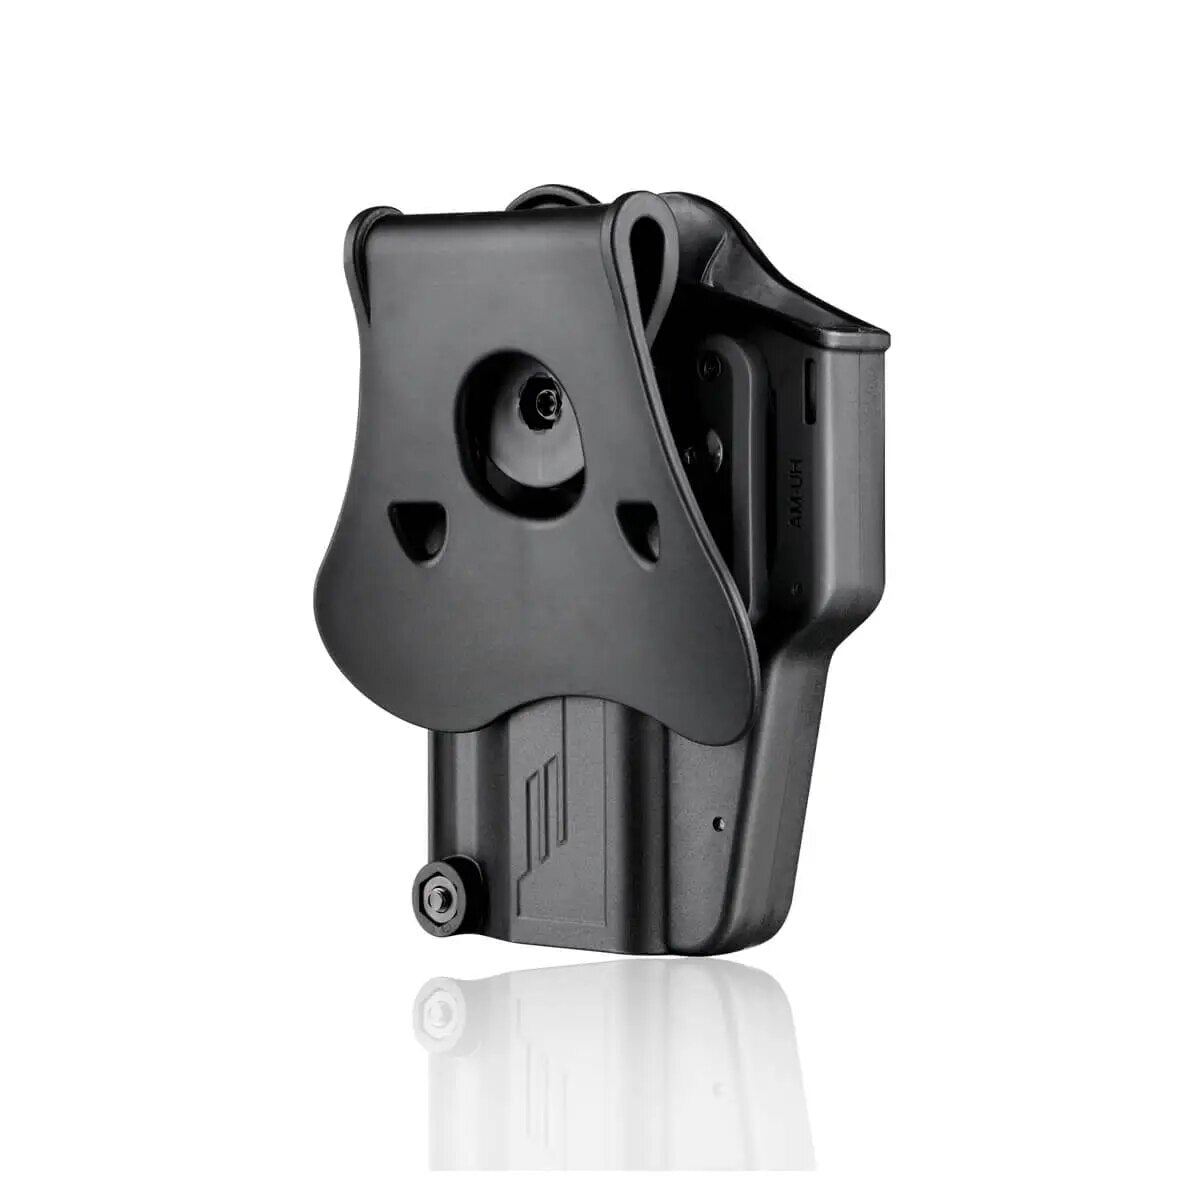 Amomax Universal Holster Fits Glock 17 19 26